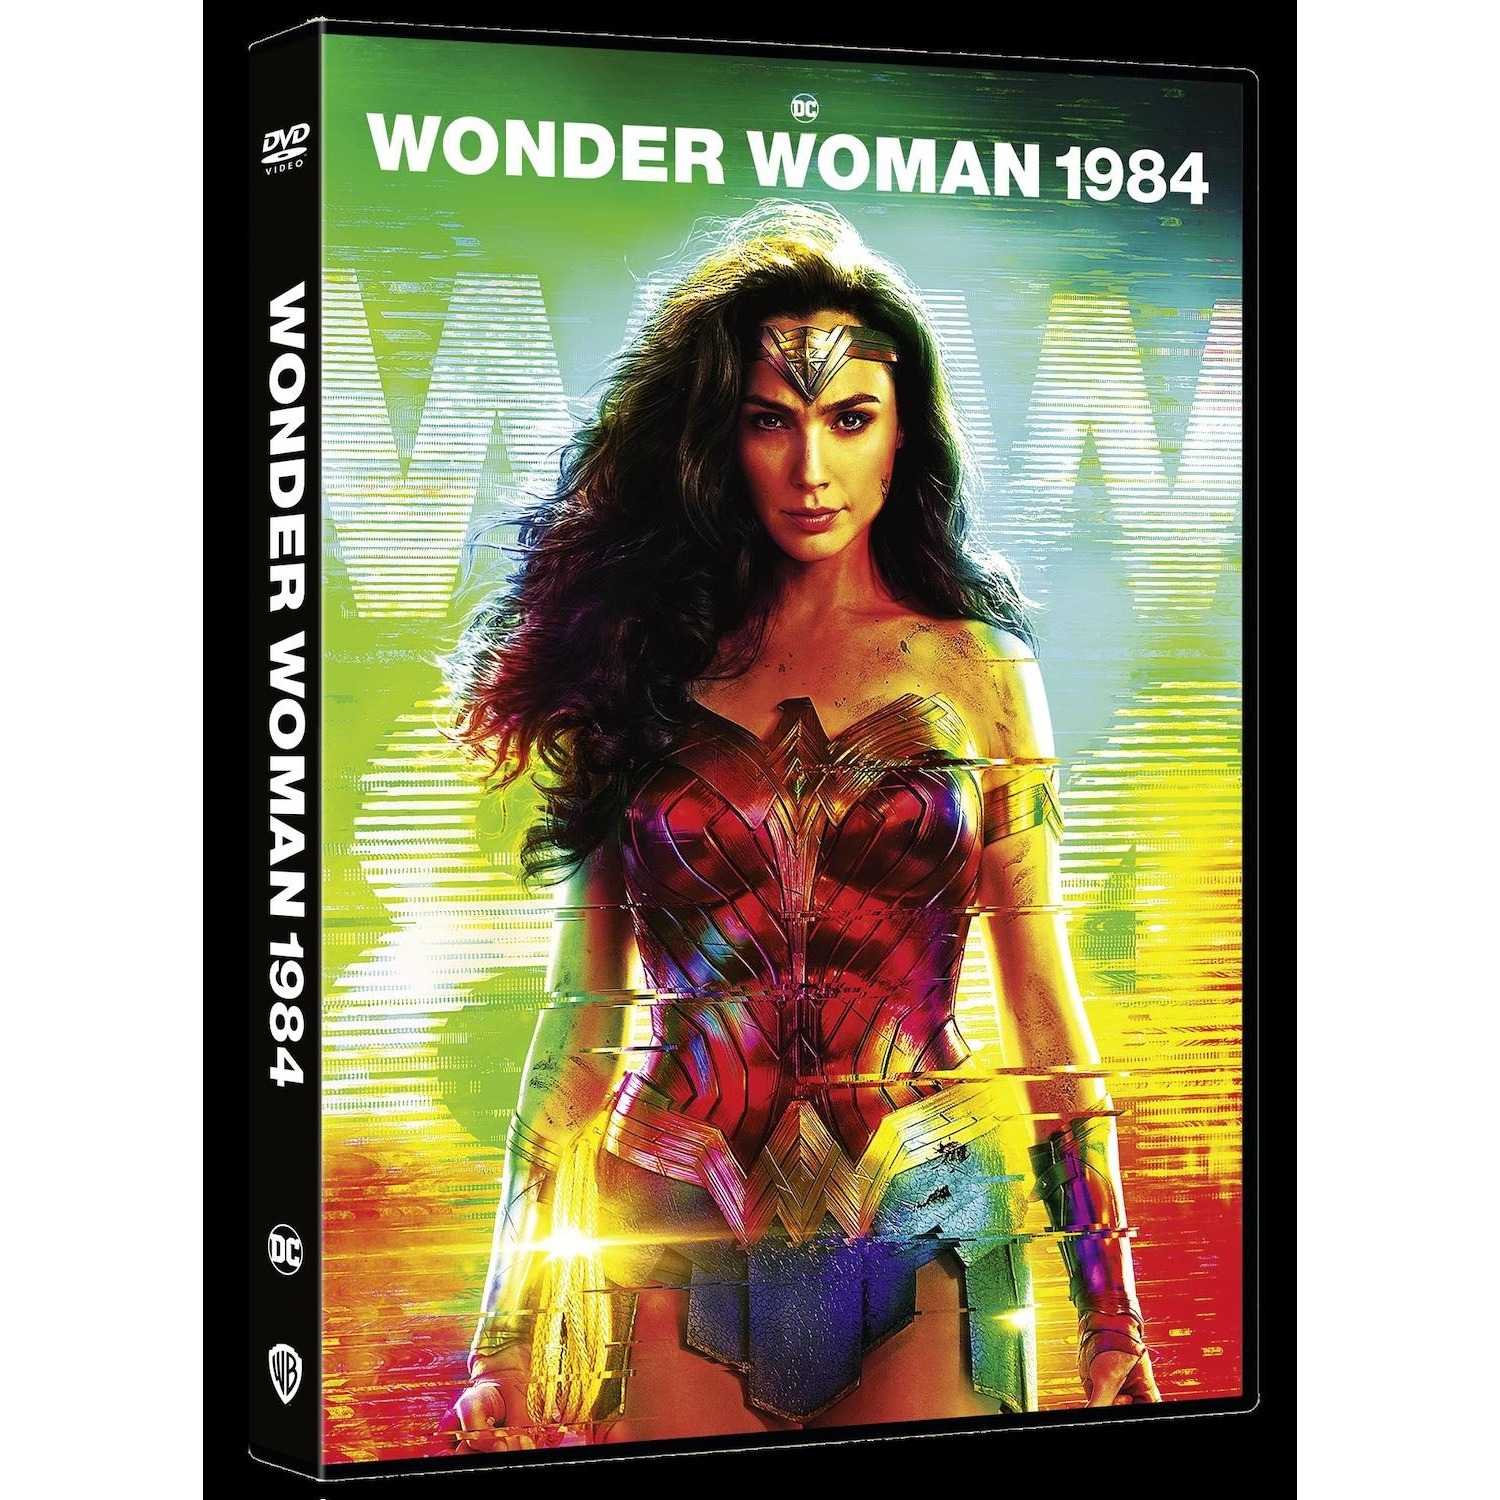 Immagine per DVD Wonder Woman 1984 da DIMOStore